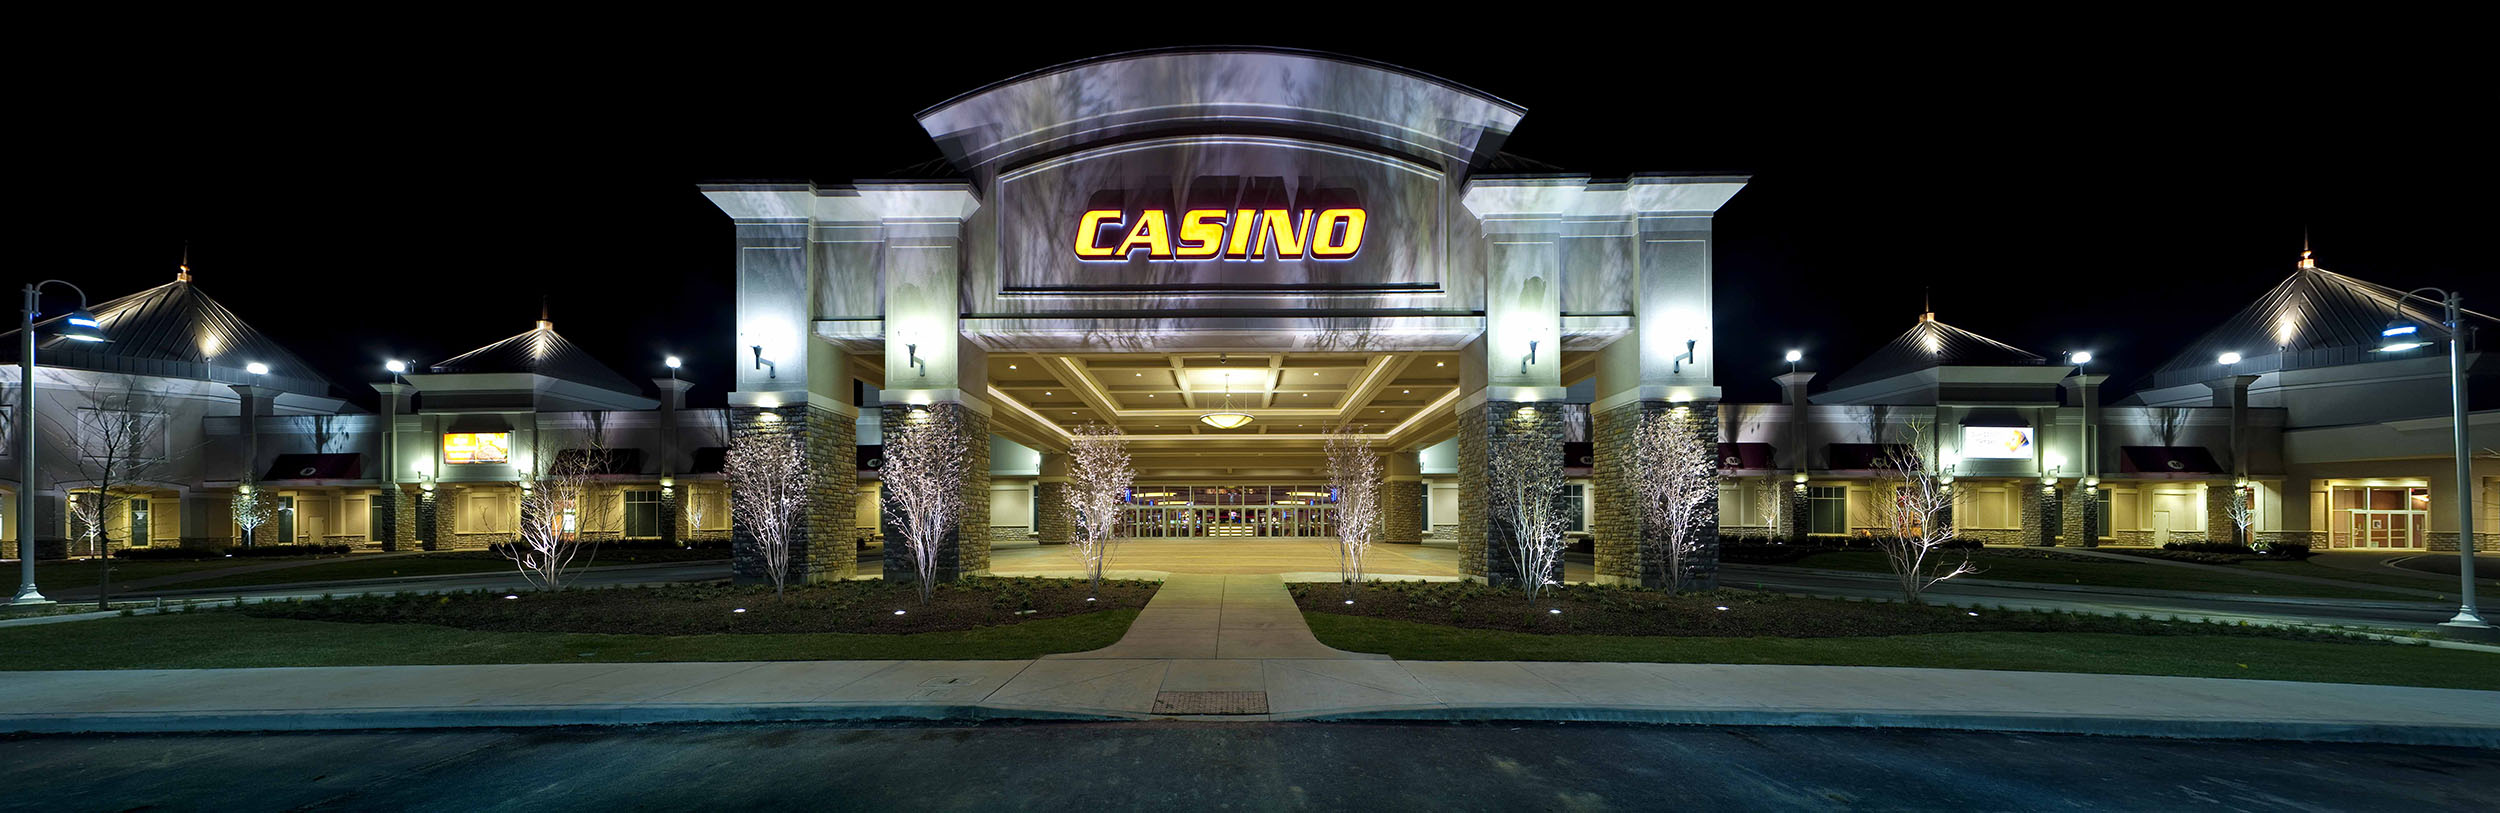 casinoA.jpg